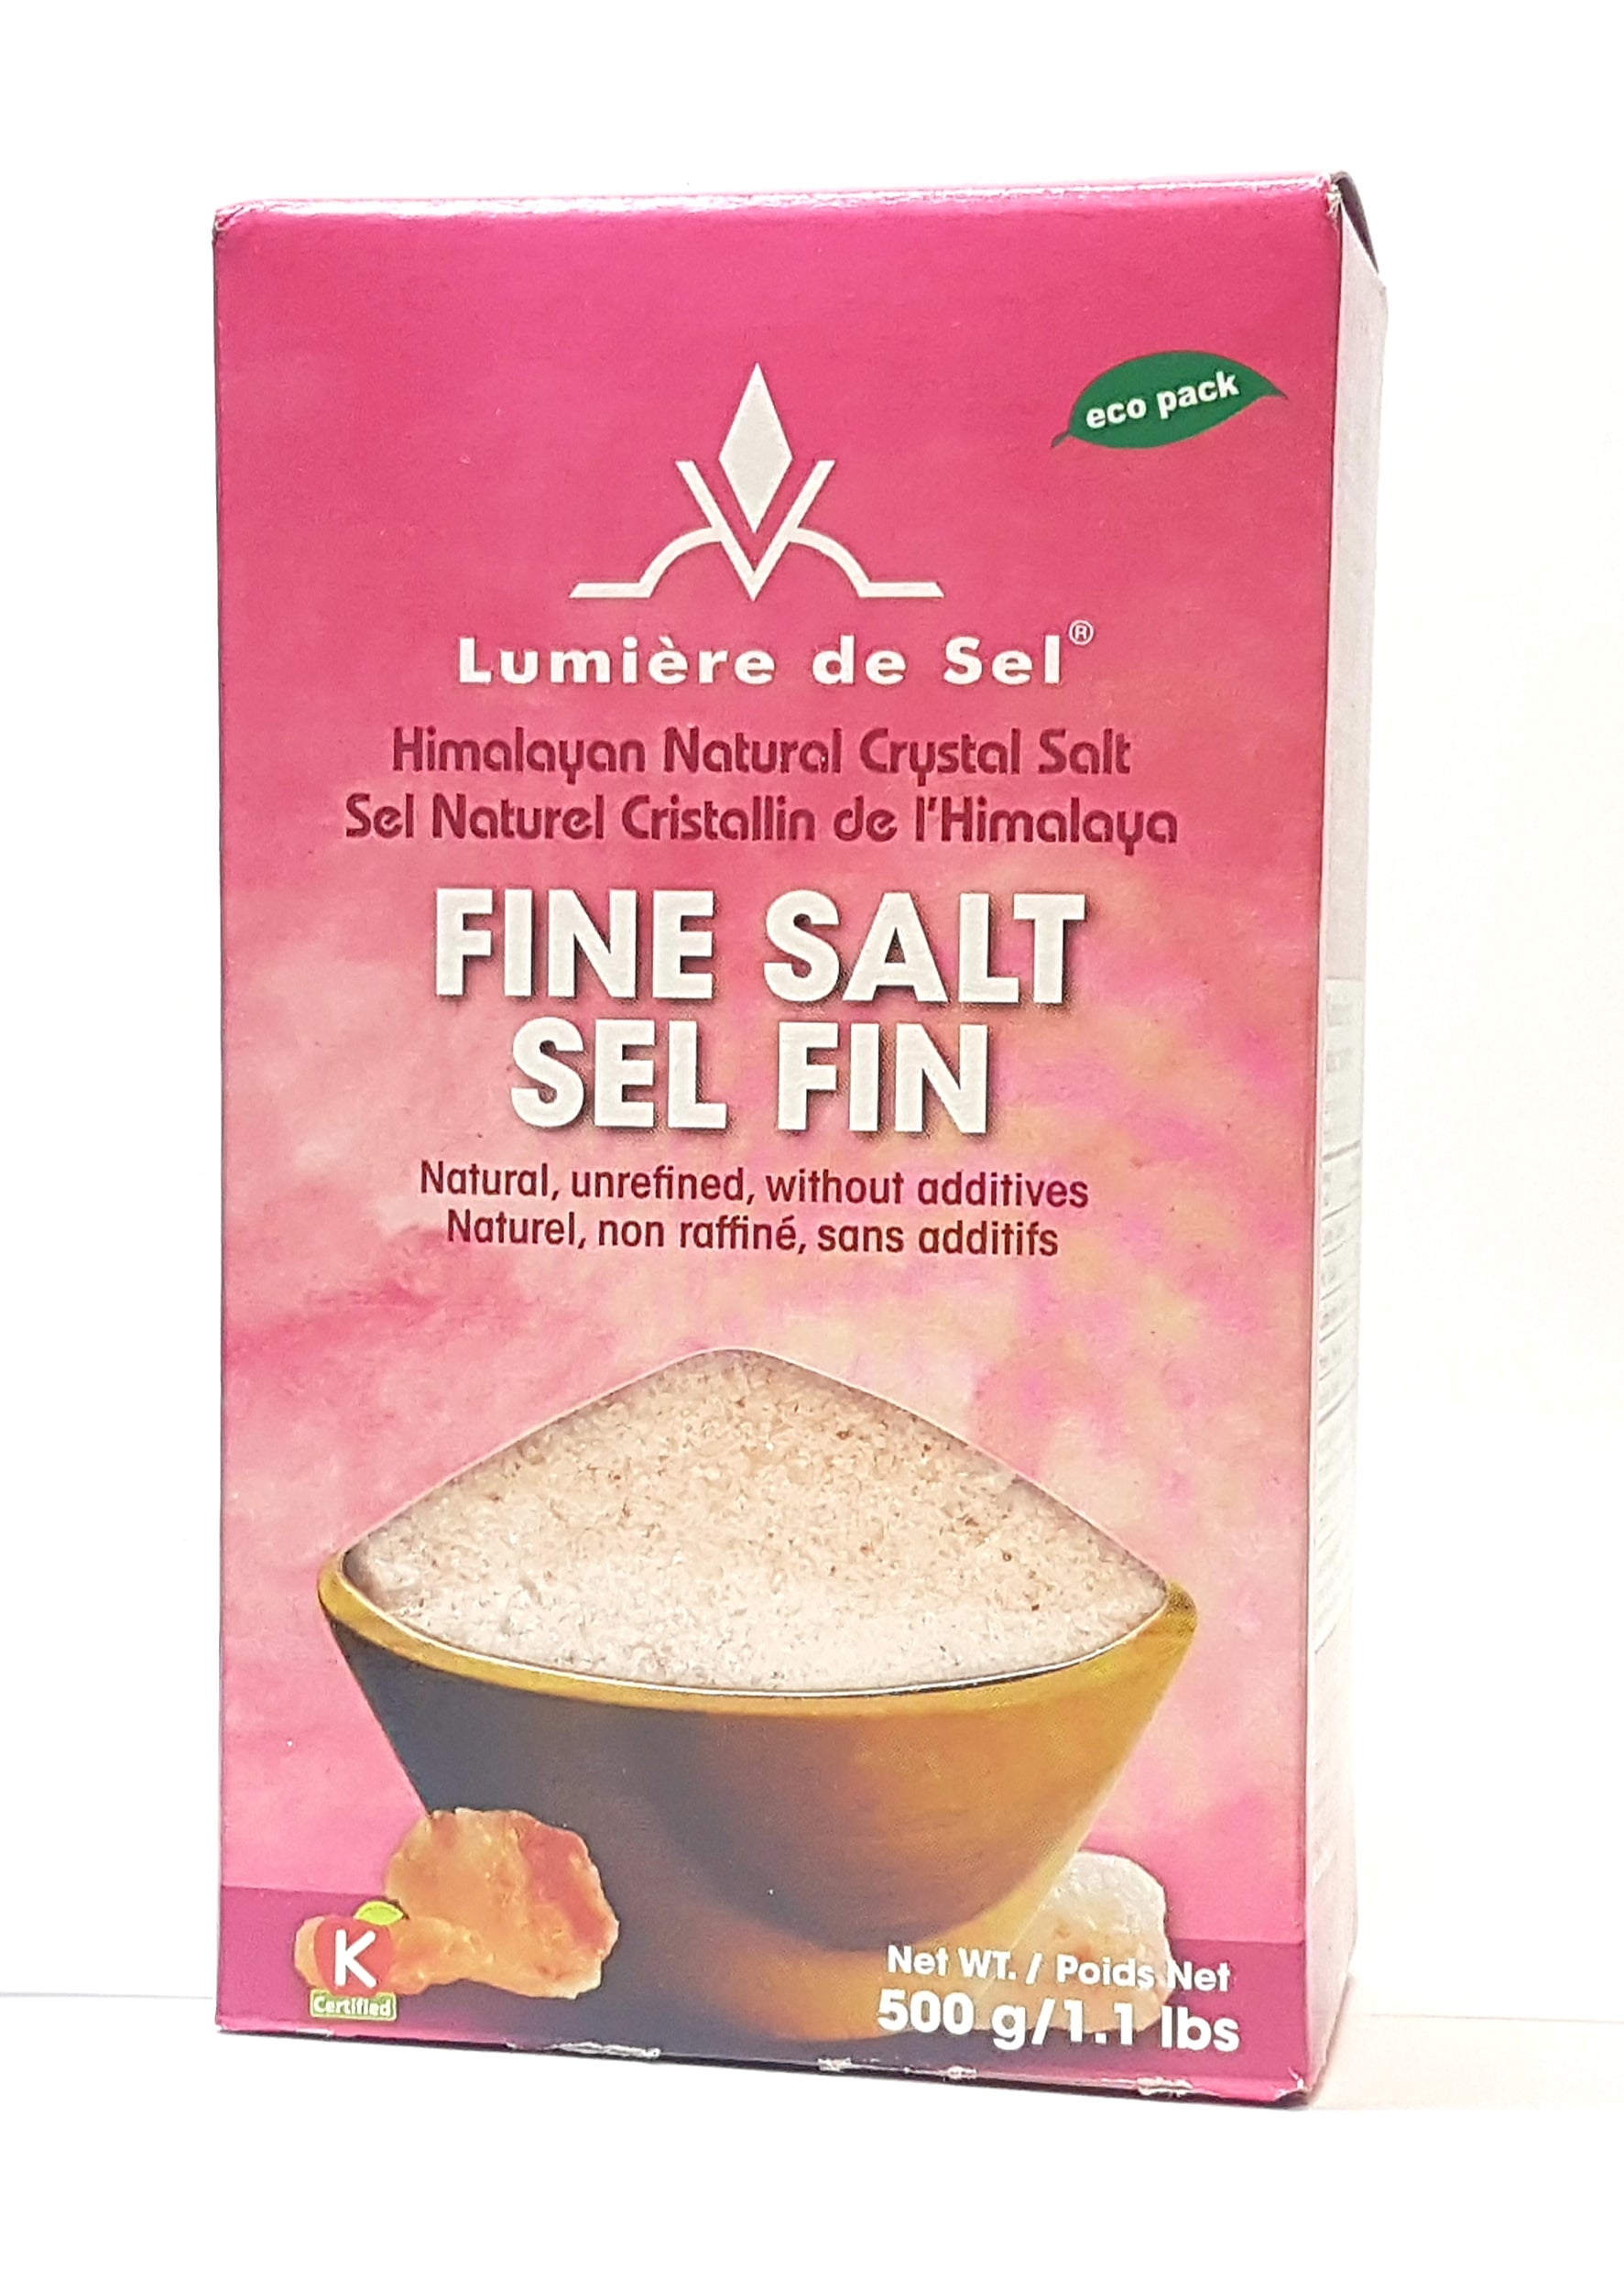 Lumiere de Sel Himalayan Crystal Salt - Fine (500g) - Lifestyle Markets